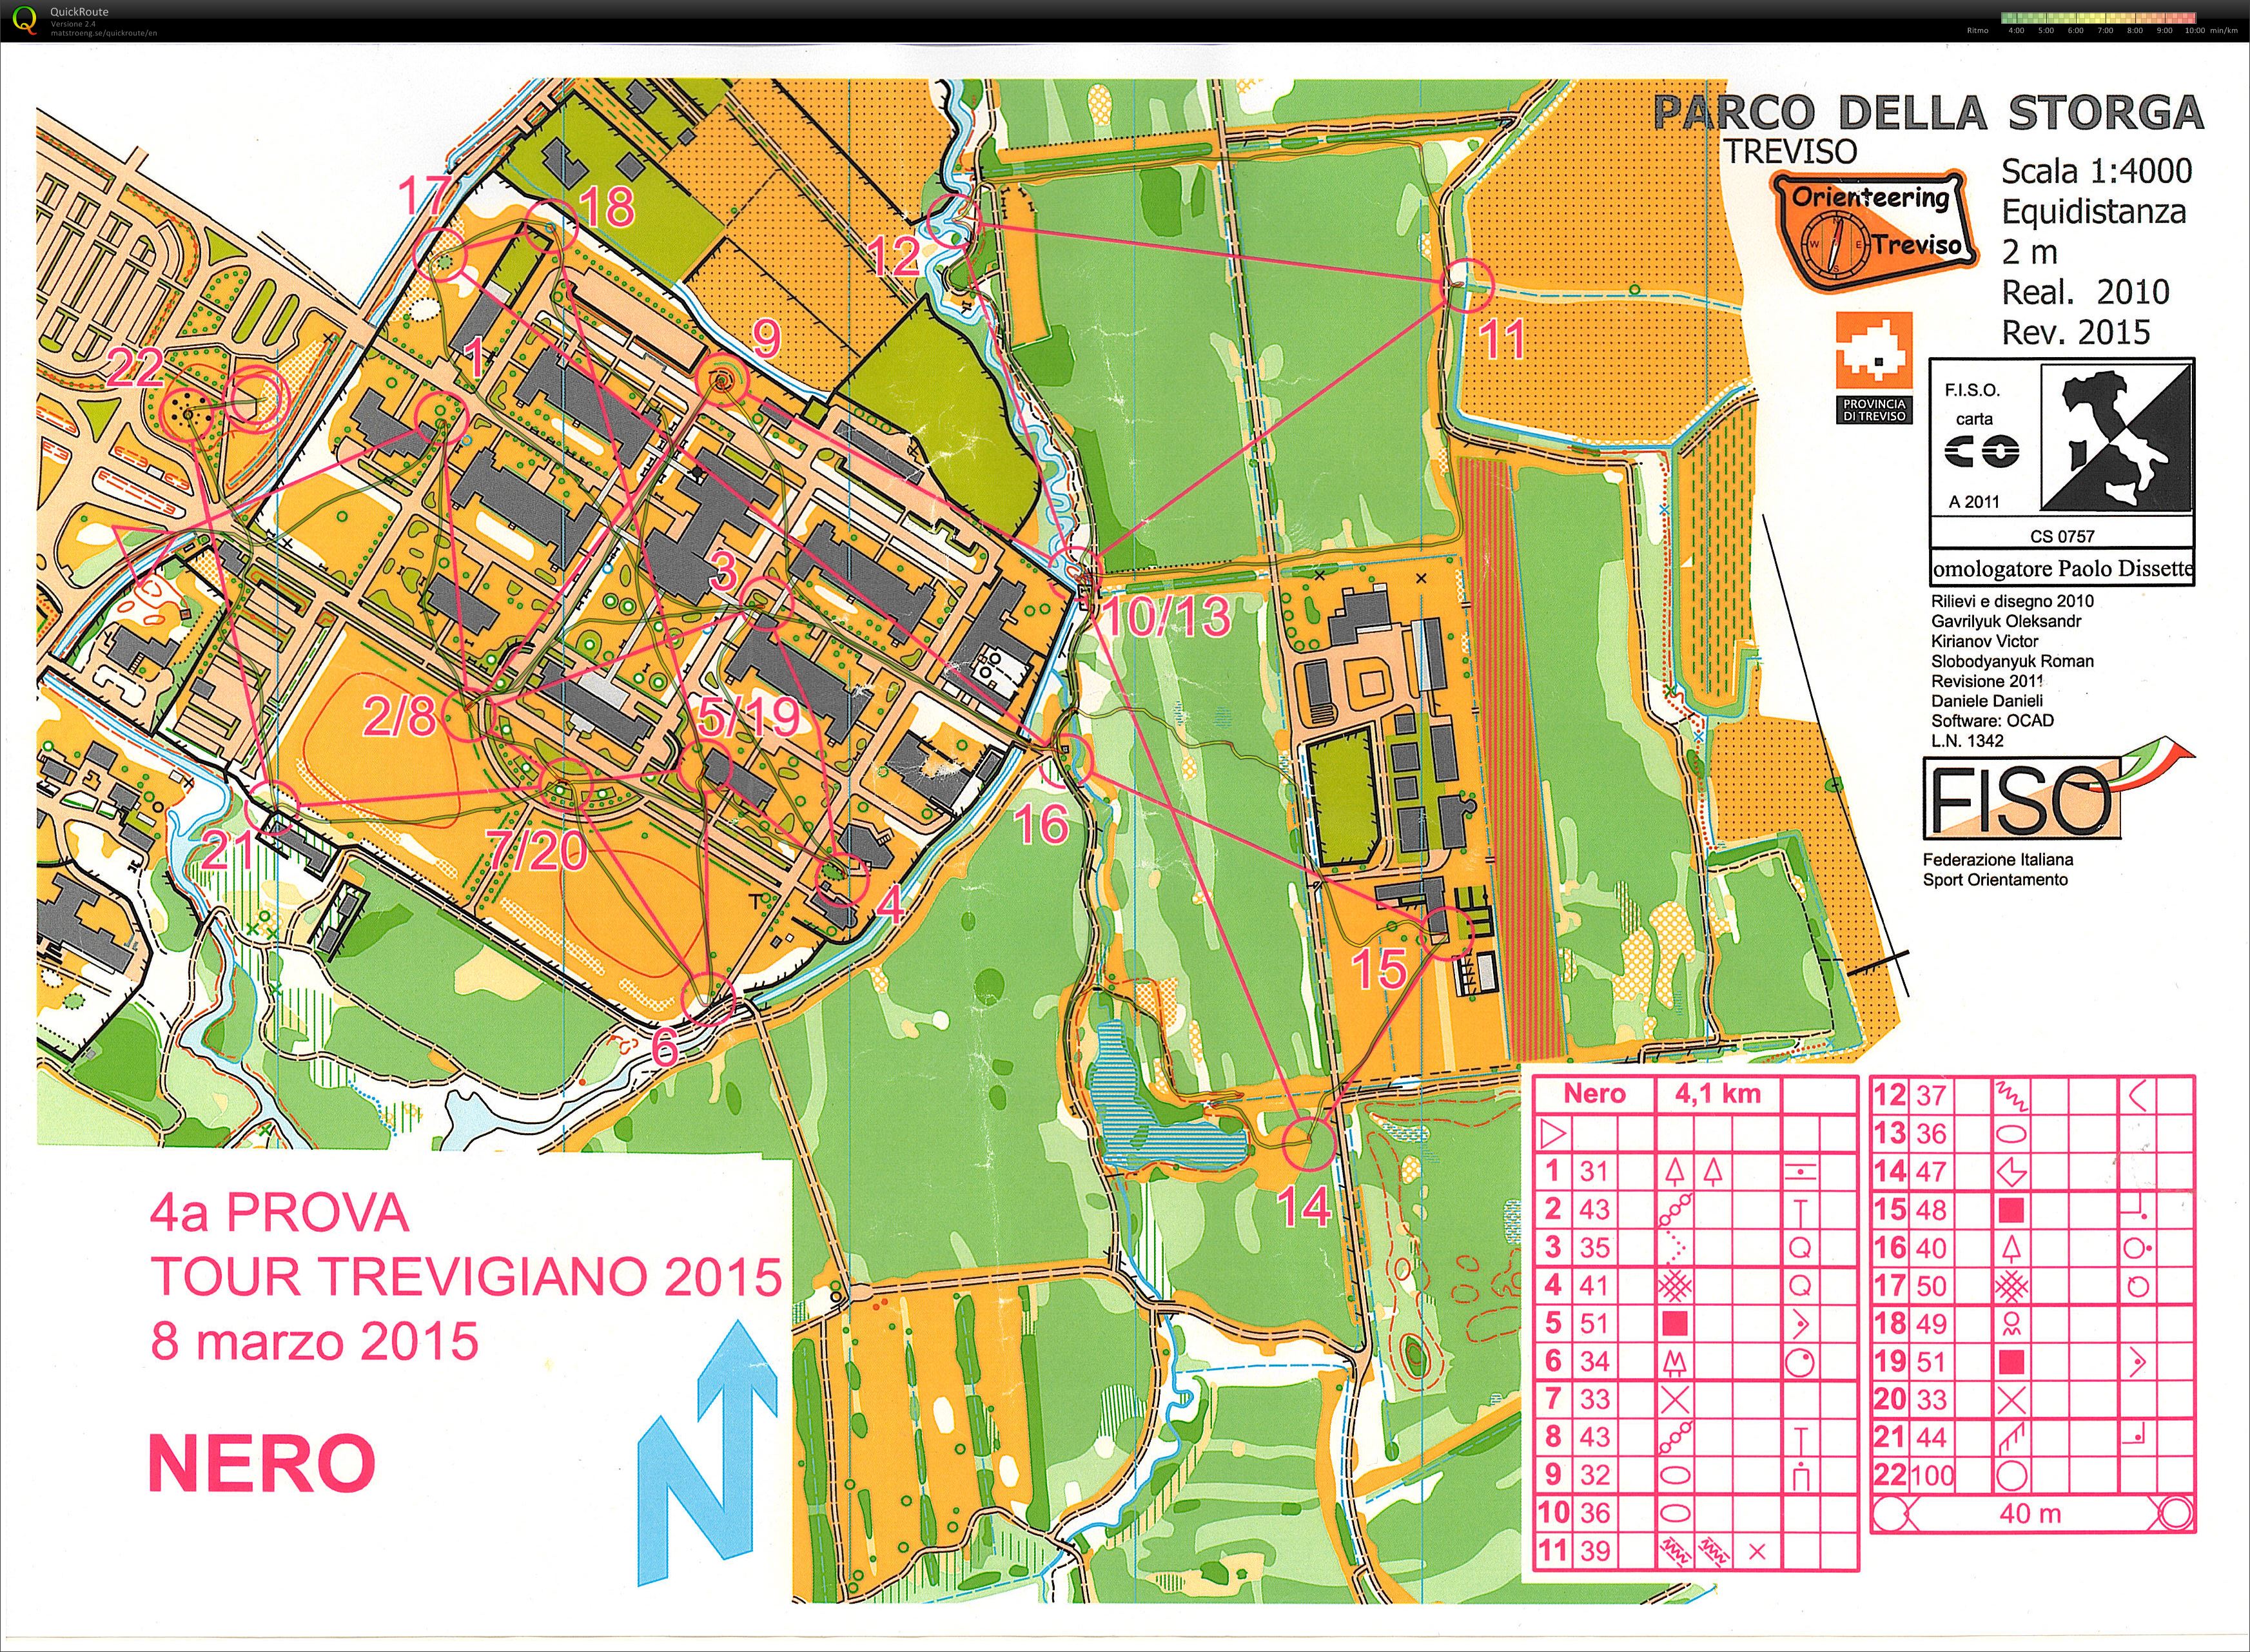 4a prova Tour Trevigiano 2015 (2015-03-08)